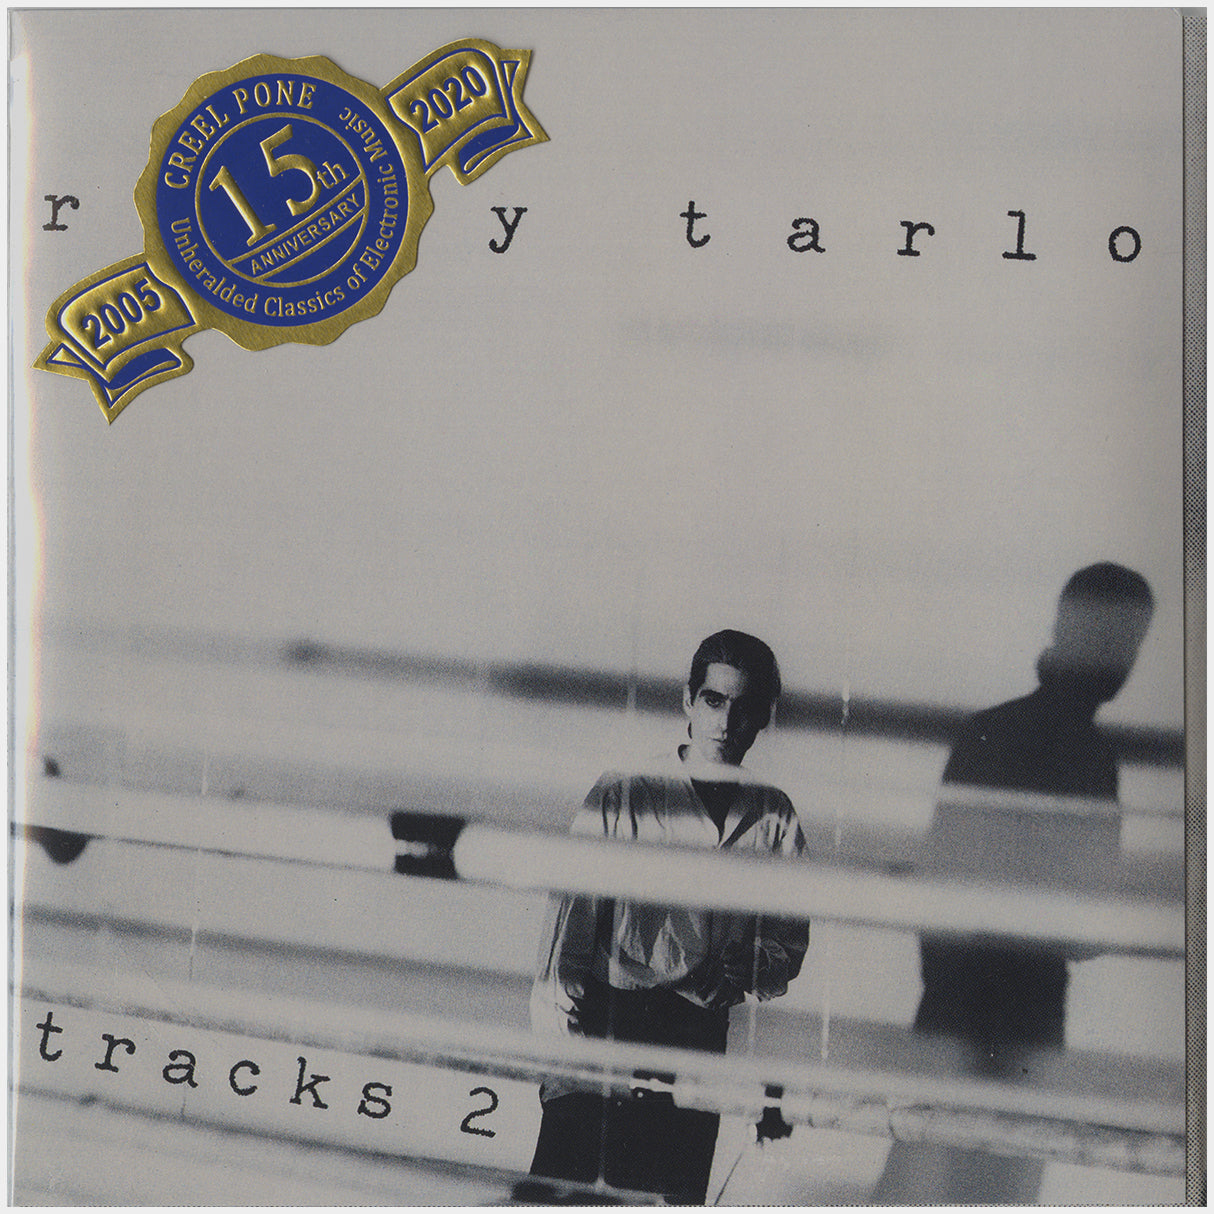 [CP 000.29 CD] Relly Tarlo; Tracks 2